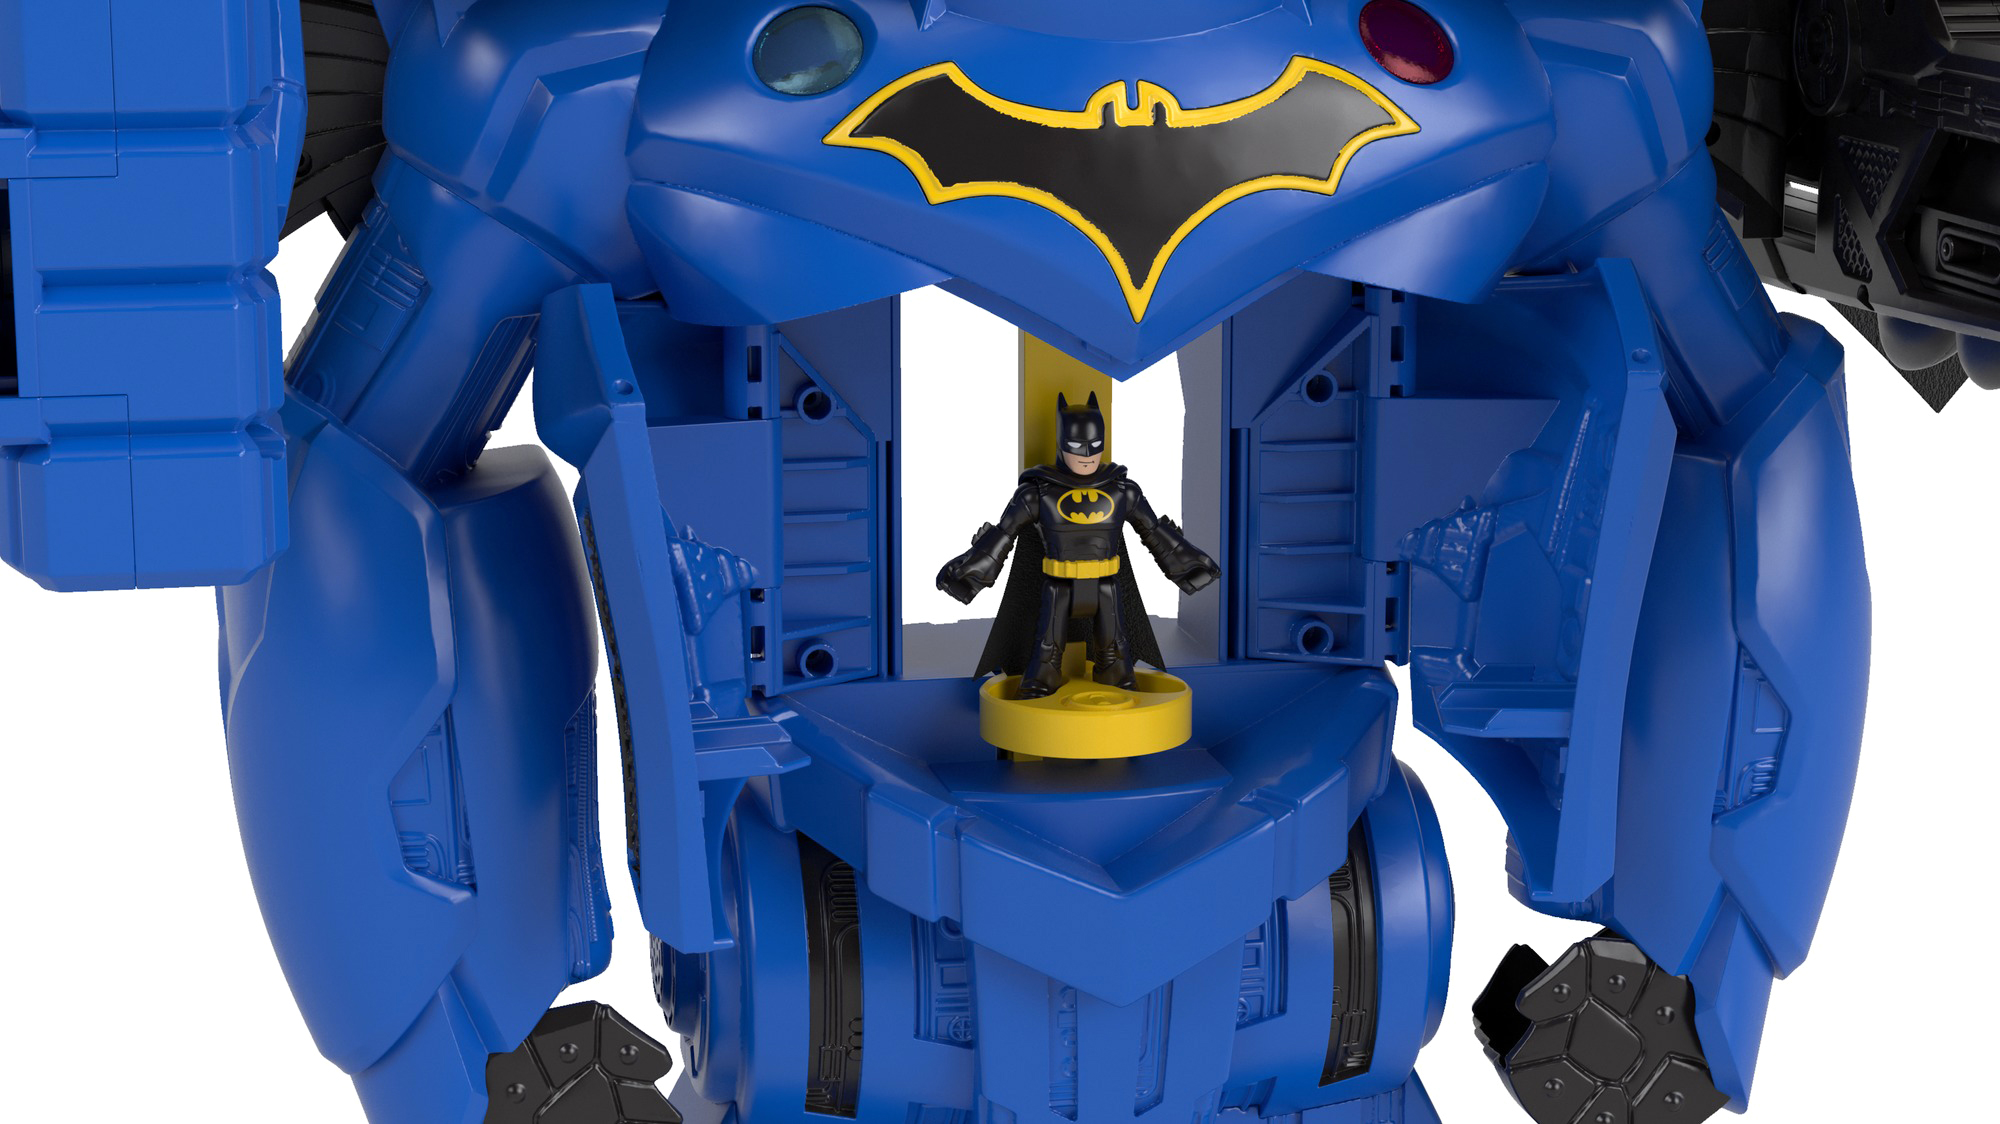 Giant Batman Robot Reveals Bruce Wayne Has Iron Man Envy